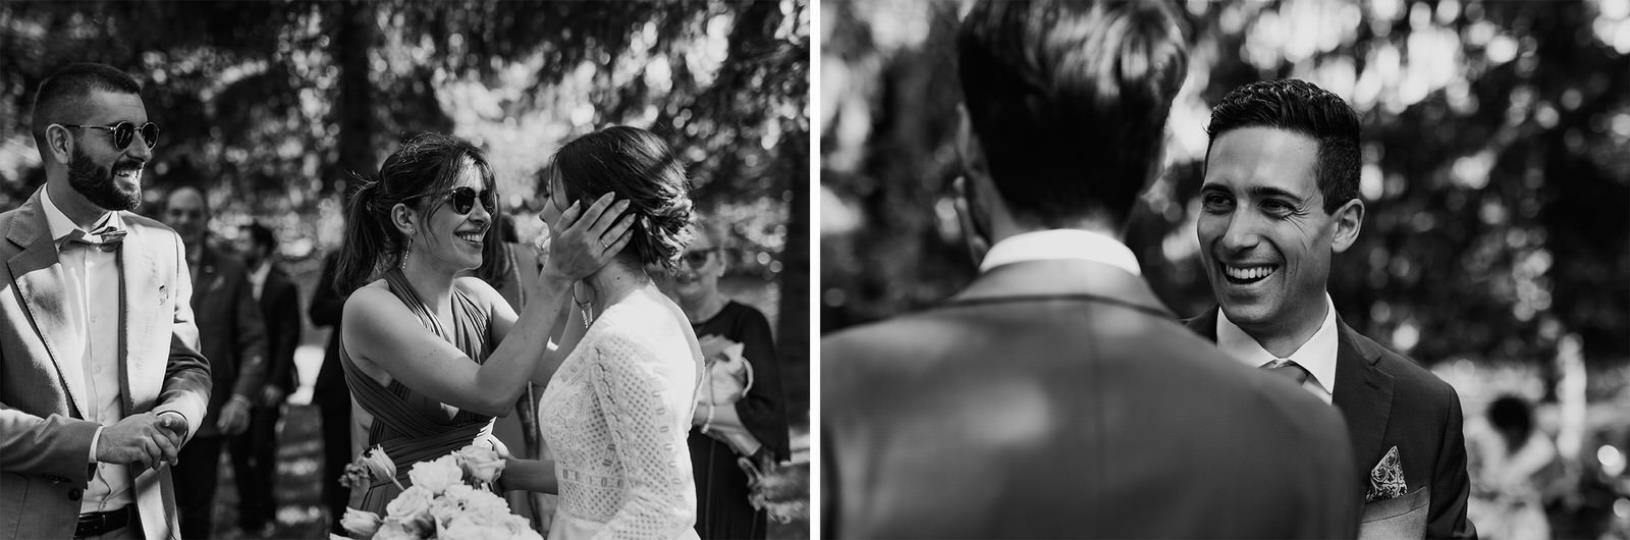 wedding reportage photographer | Laura Stramacchia | Wedding Photography